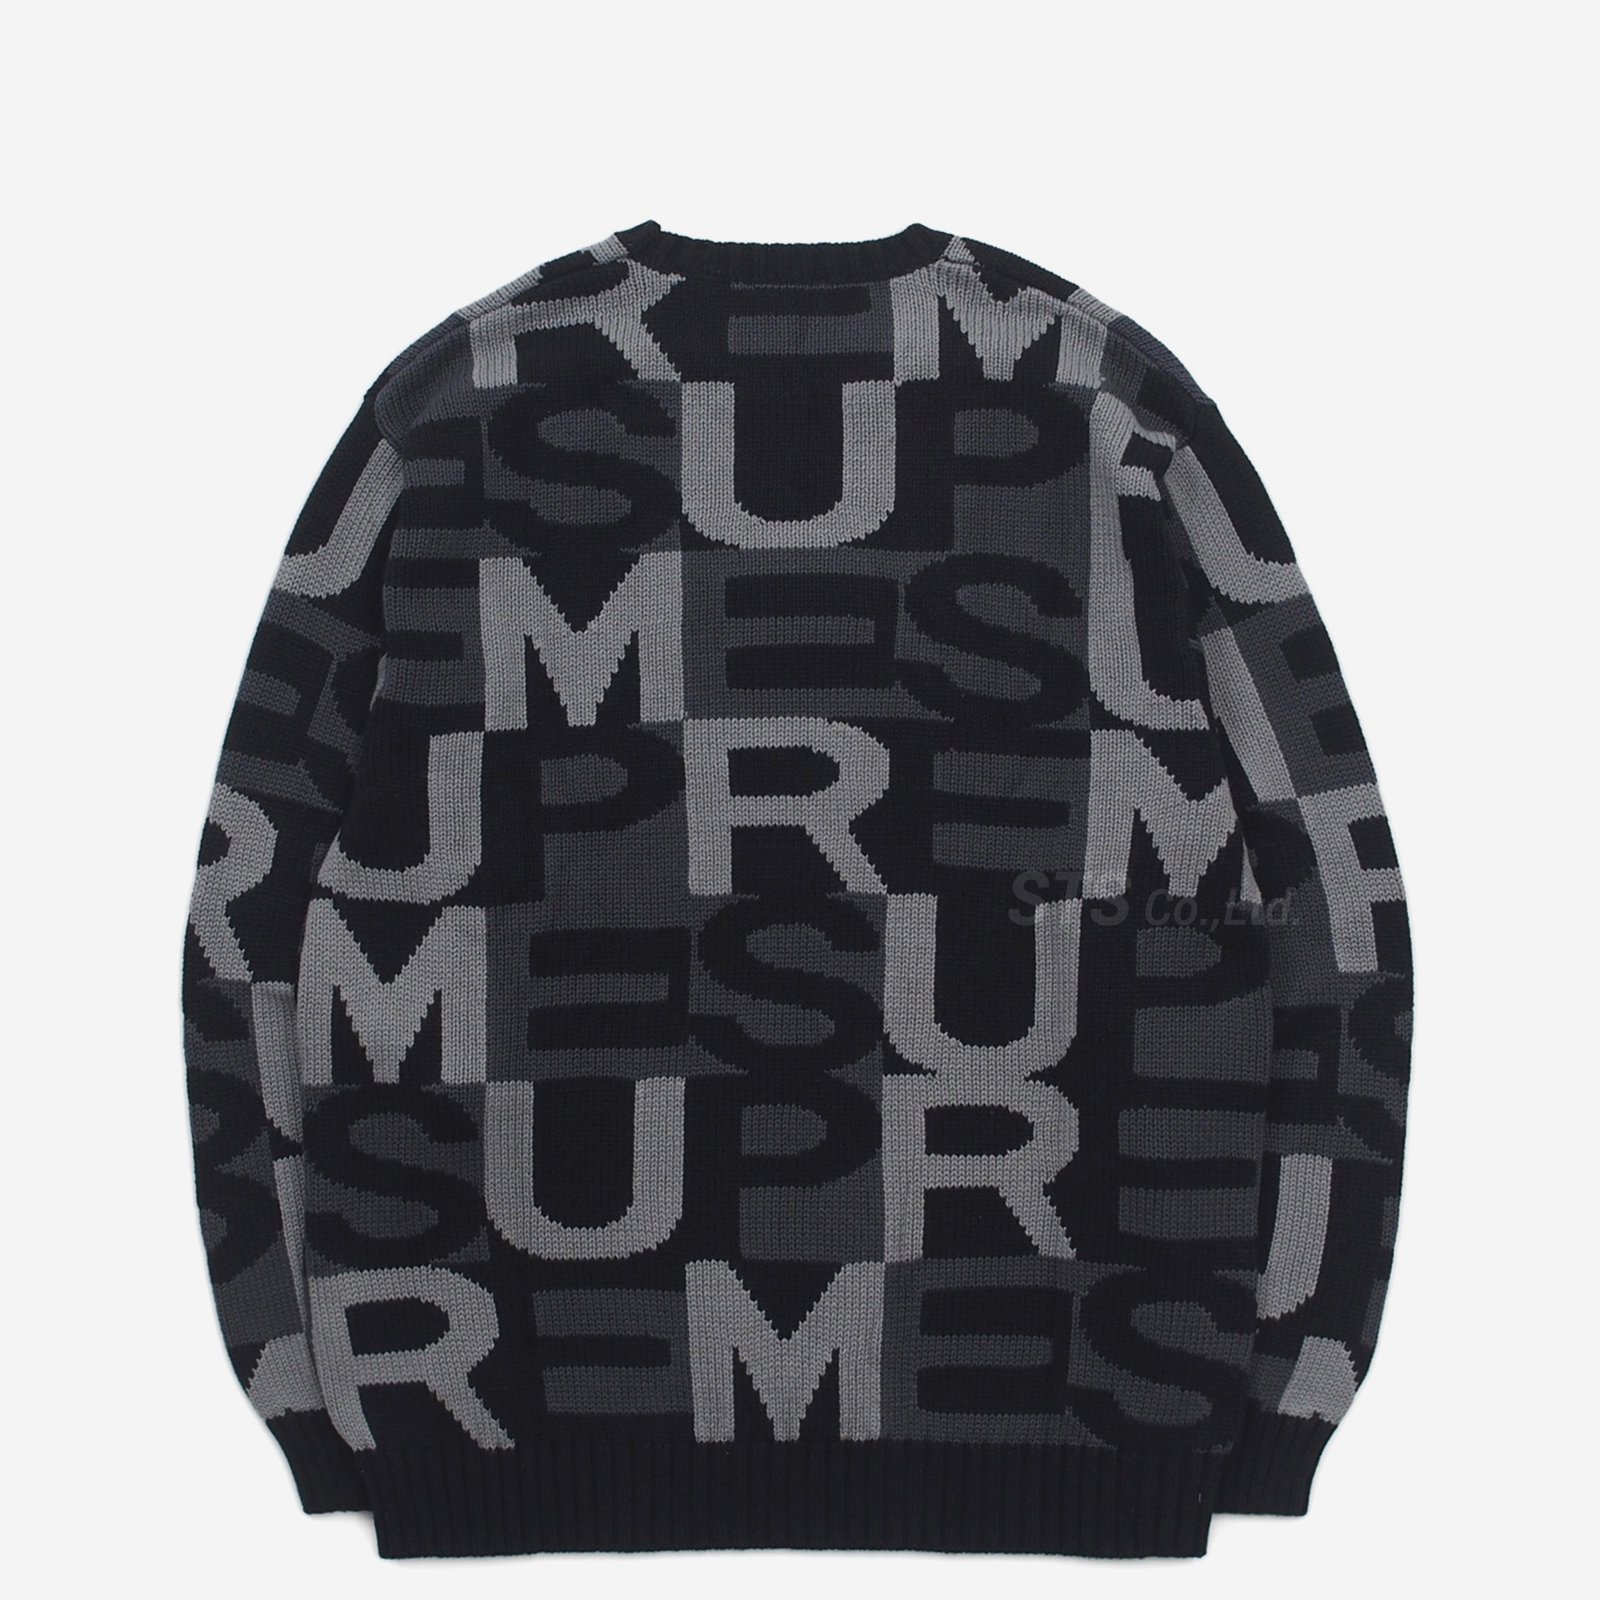 Supreme - Big Letters Sweater - UG.SHAFT